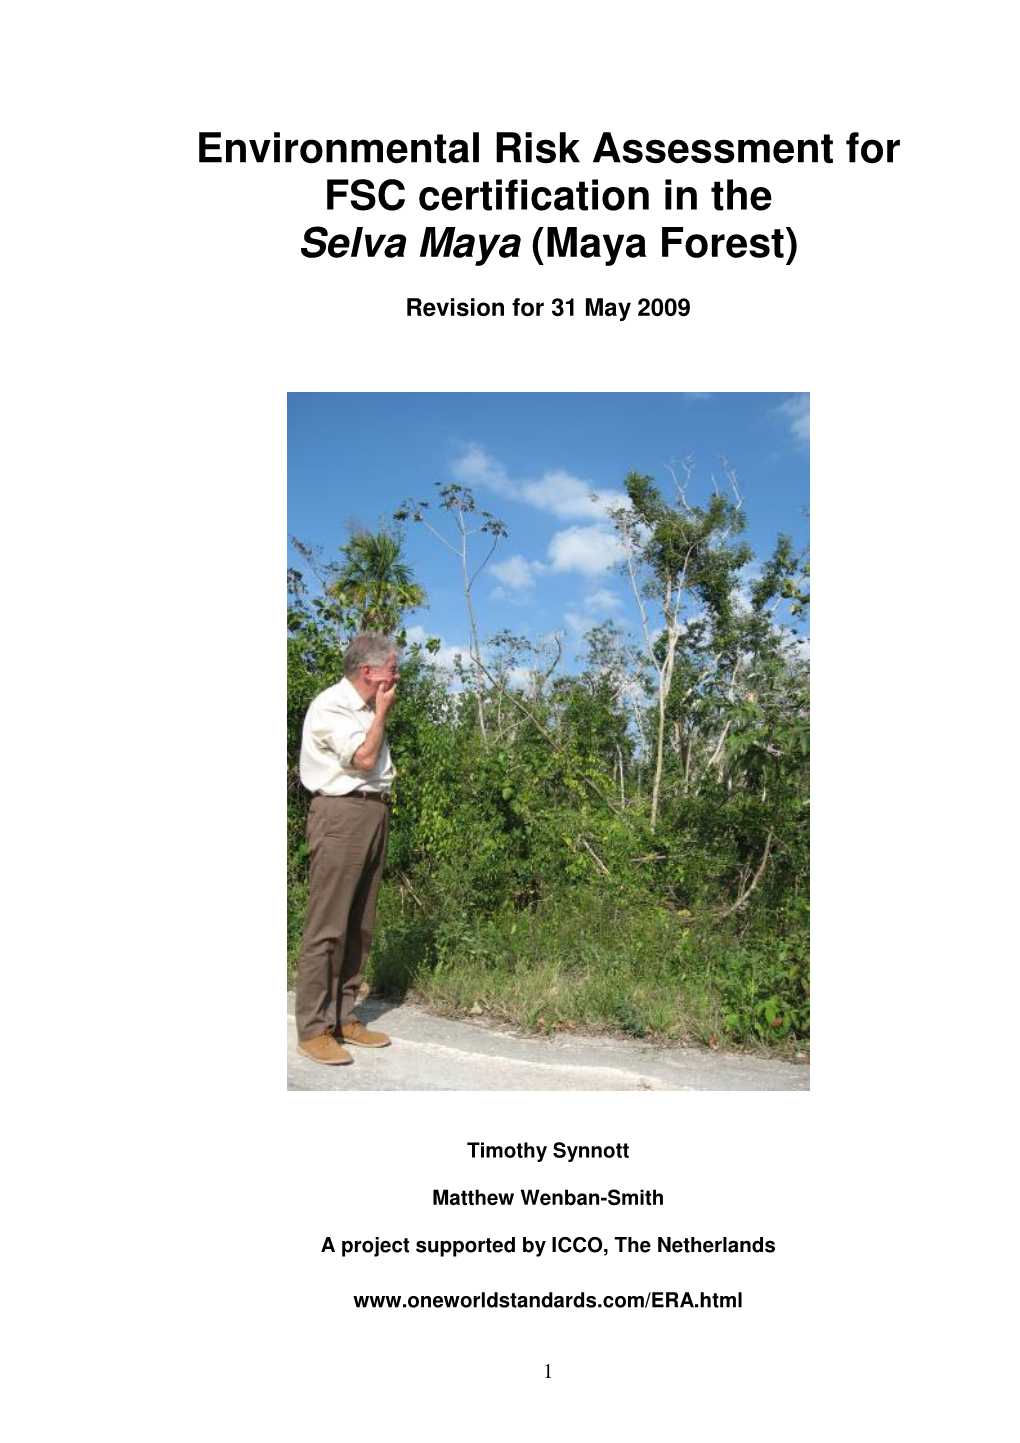 Environmental Risk Assessment for FSC Certification in the Selva Maya (Maya Forest)